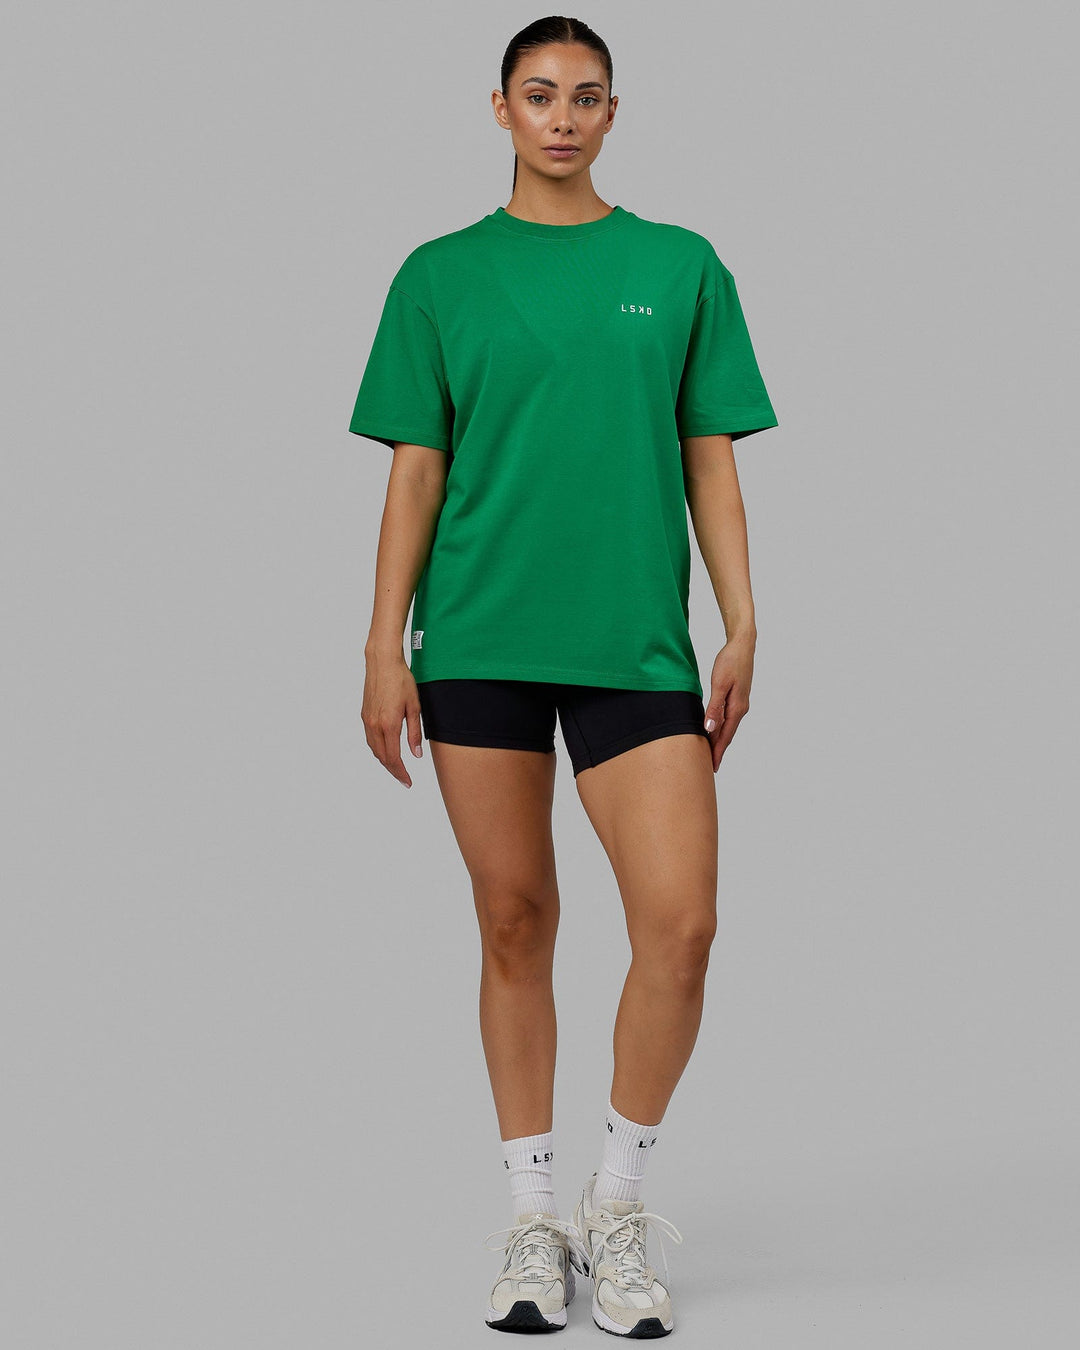 Woman wearing Unisex VS5 FLXCotton Tee Oversize - Green Tambourine-White